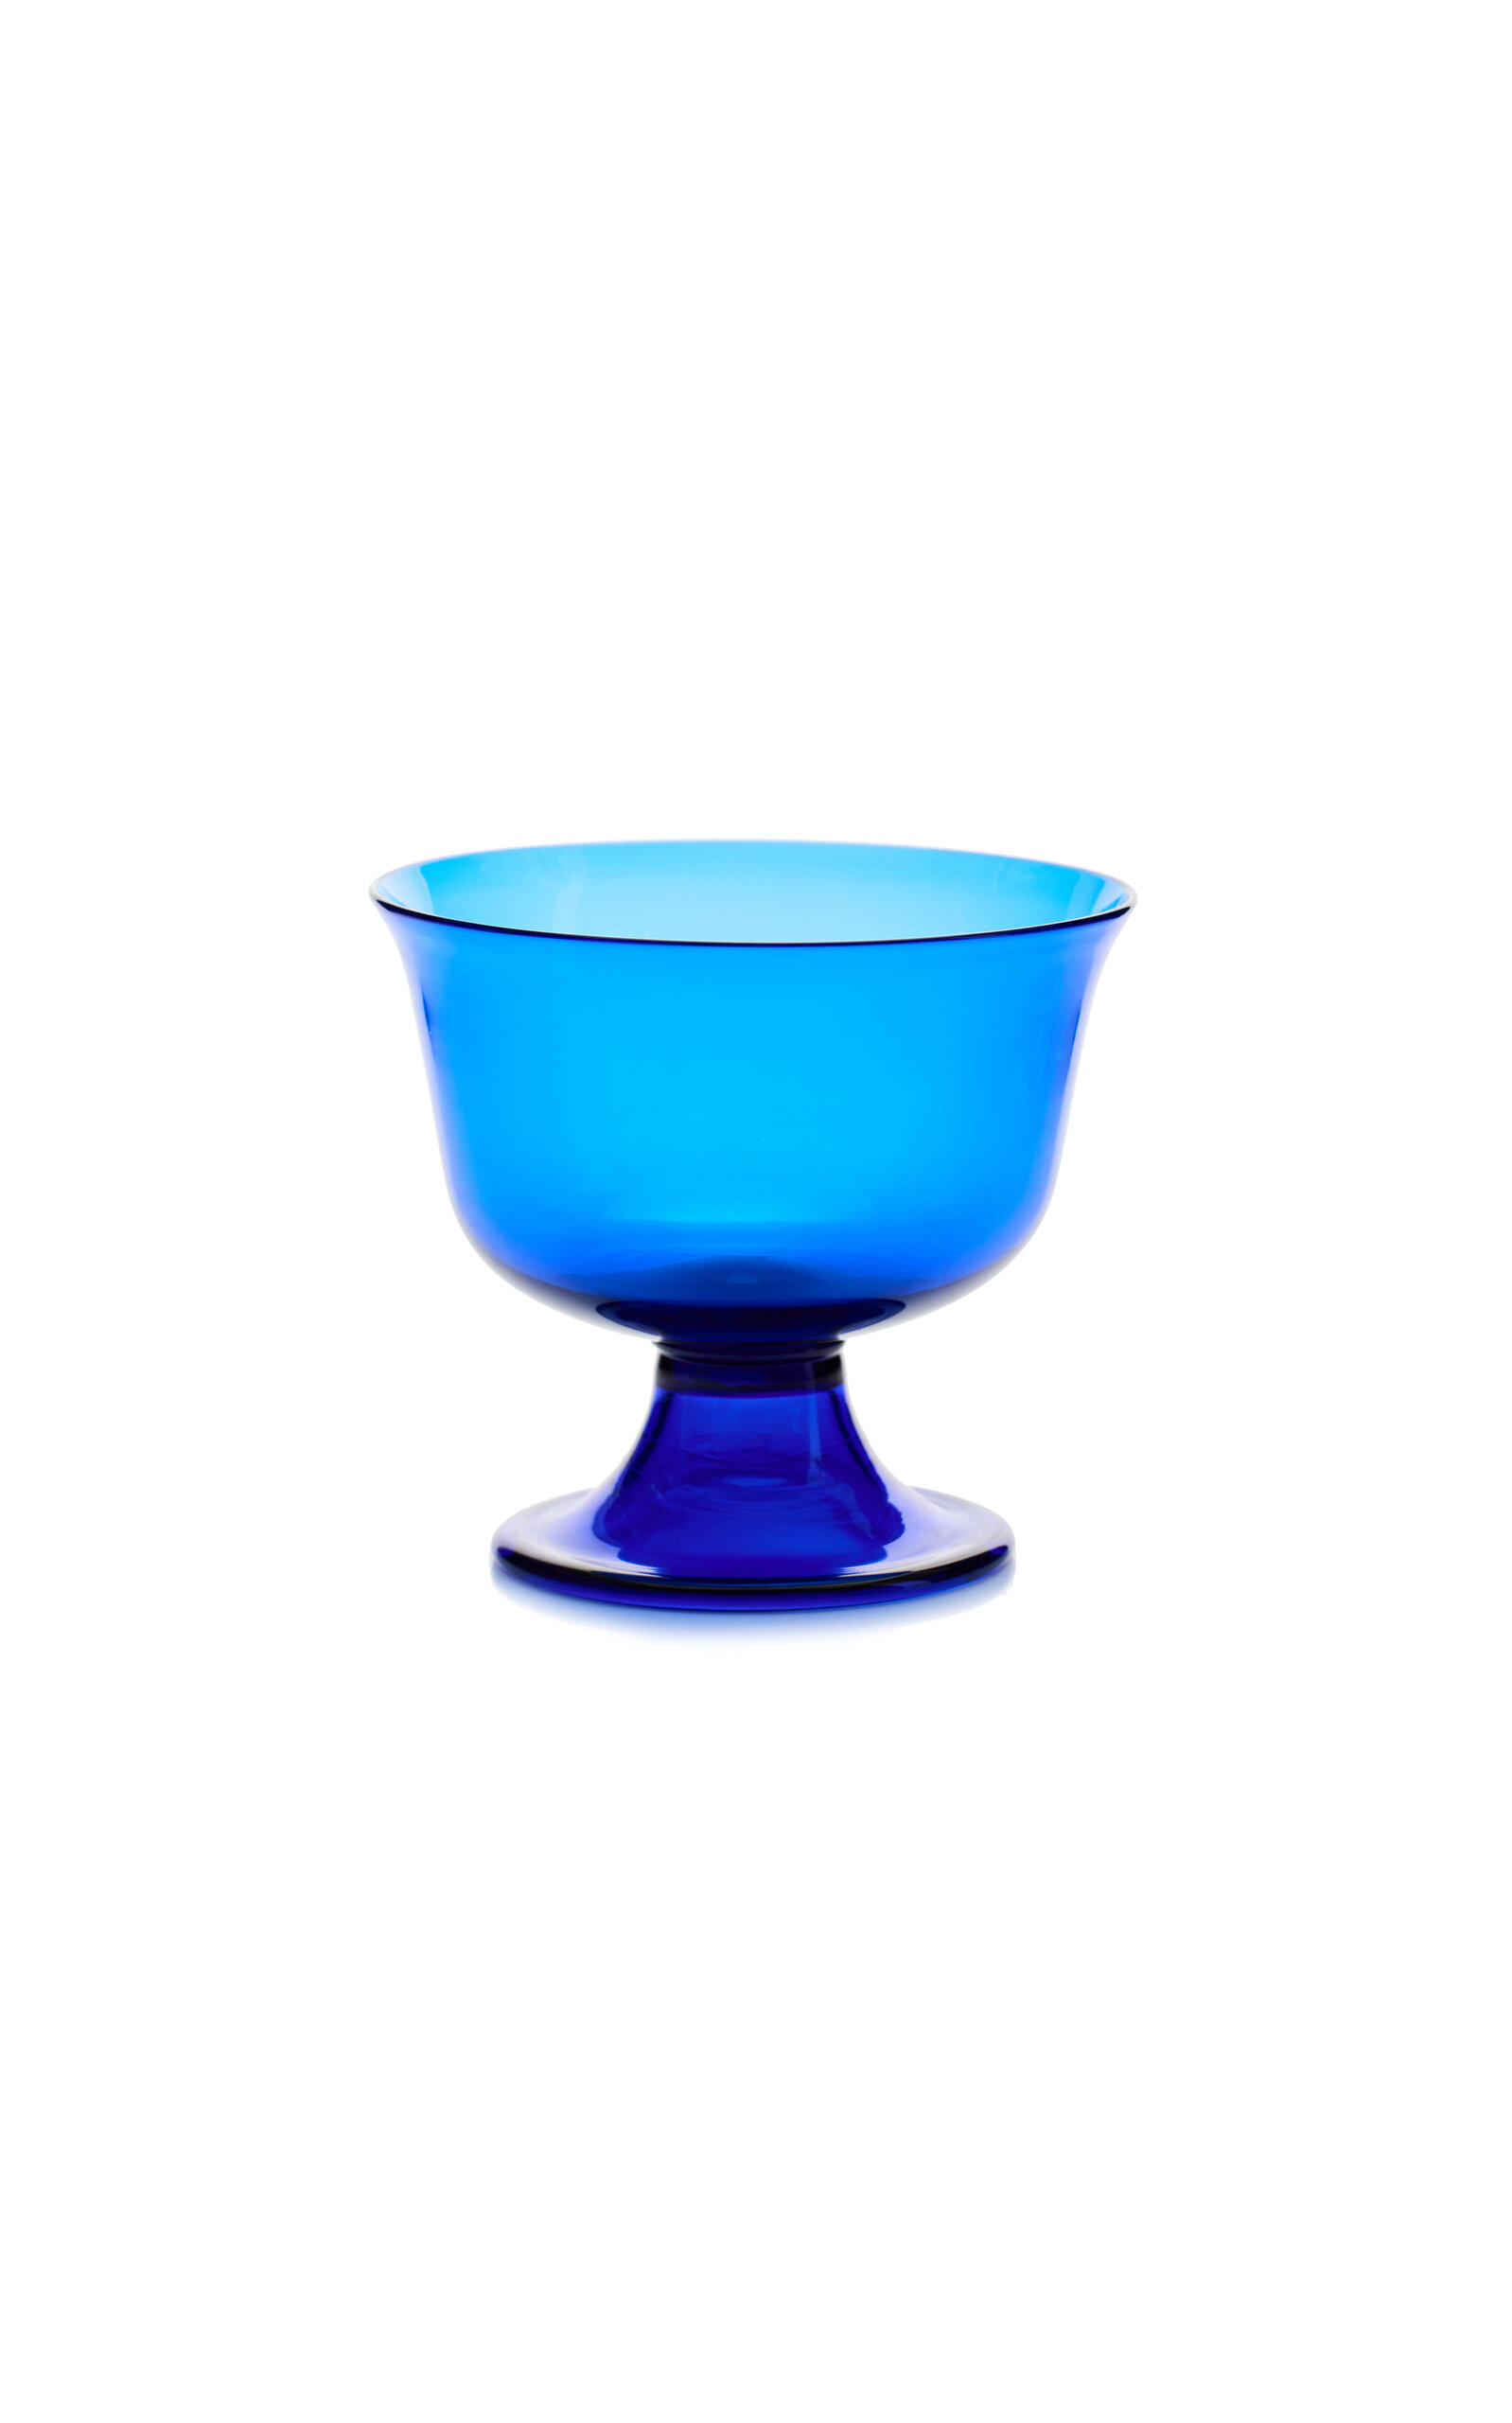 Moda Domus Barovier Small Bowl In Blue